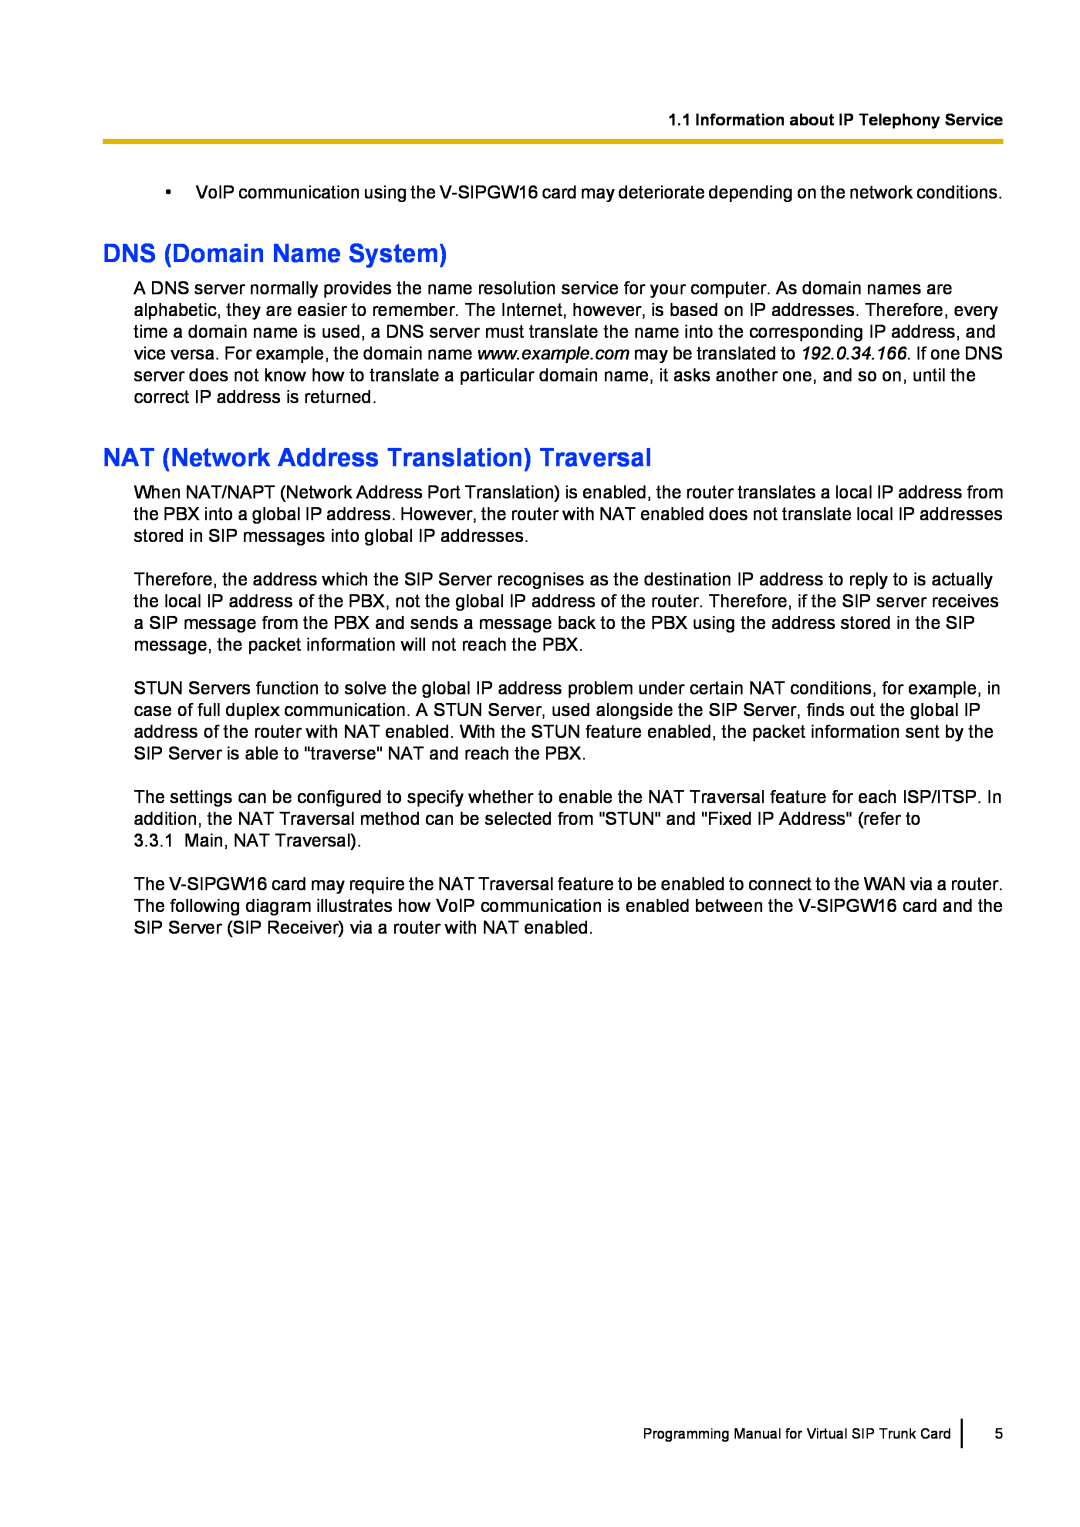 Panasonic KX-TDE100 manual DNS Domain Name System, NAT Network Address Translation Traversal 